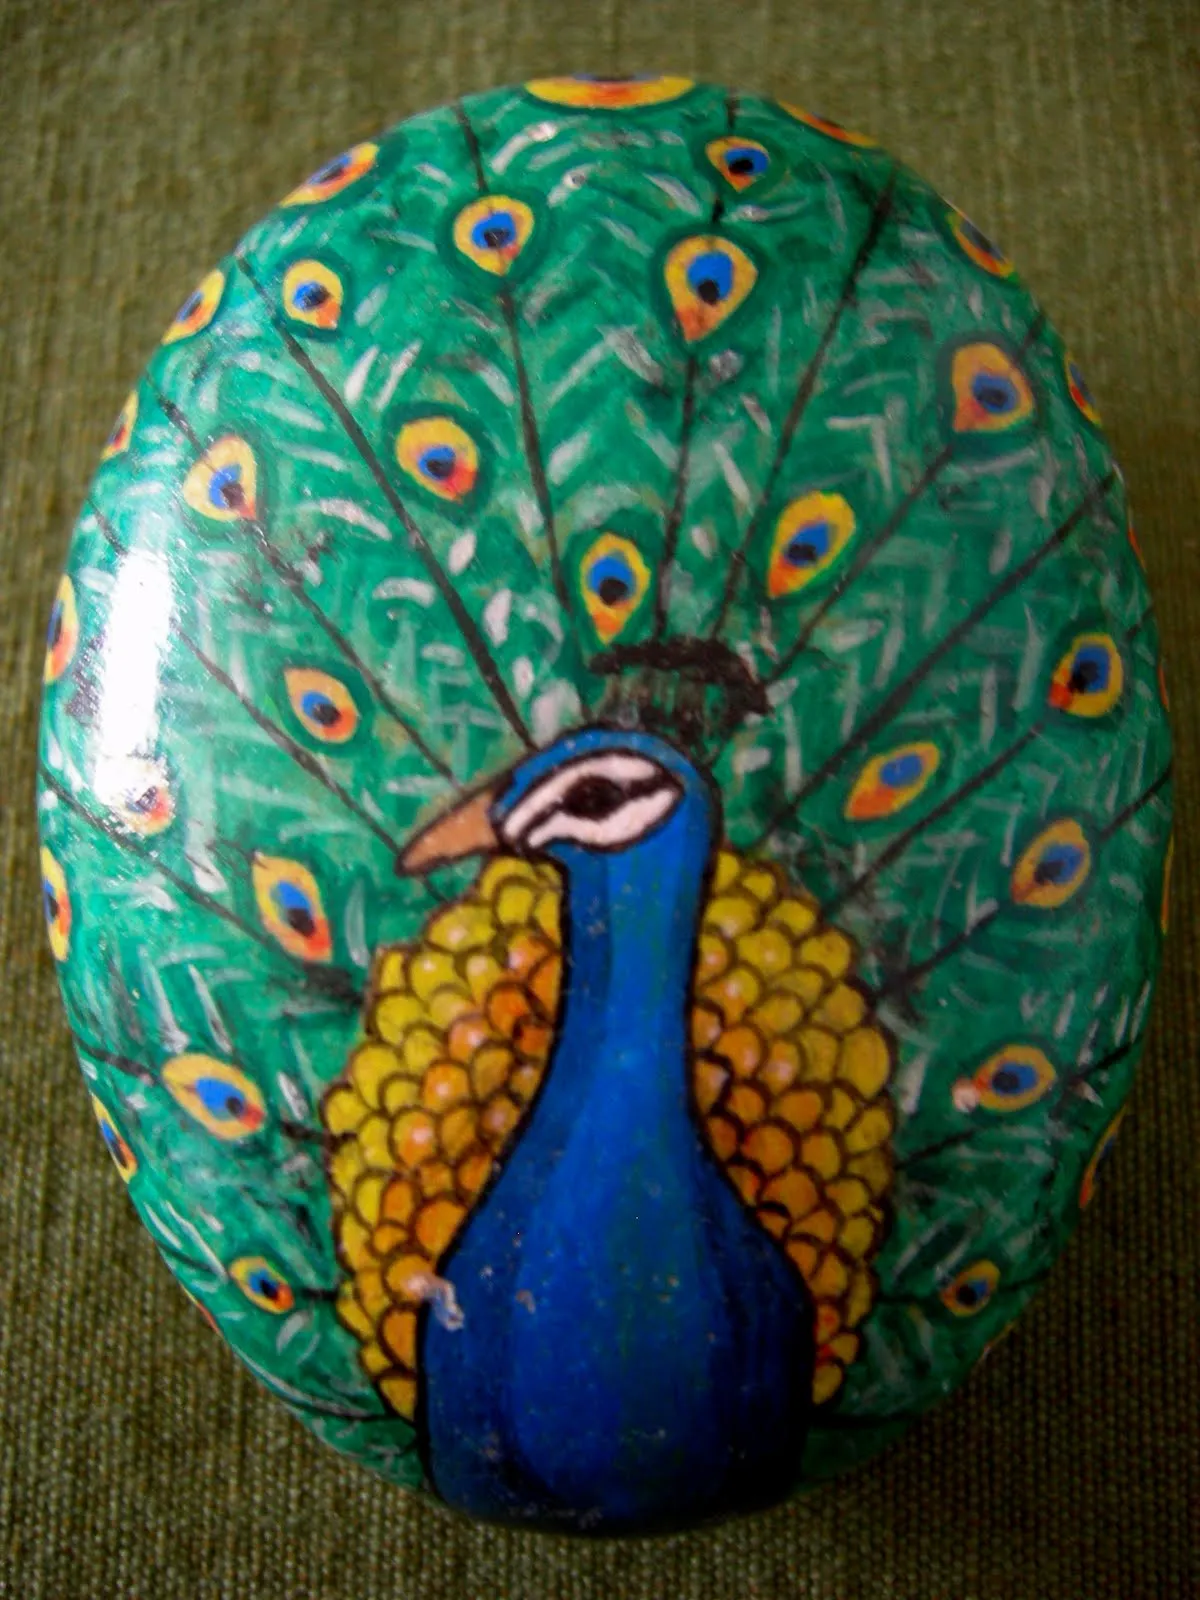 Kedibu Murales y Objetos Decorativos: Piedras pintadas: pavo real ...